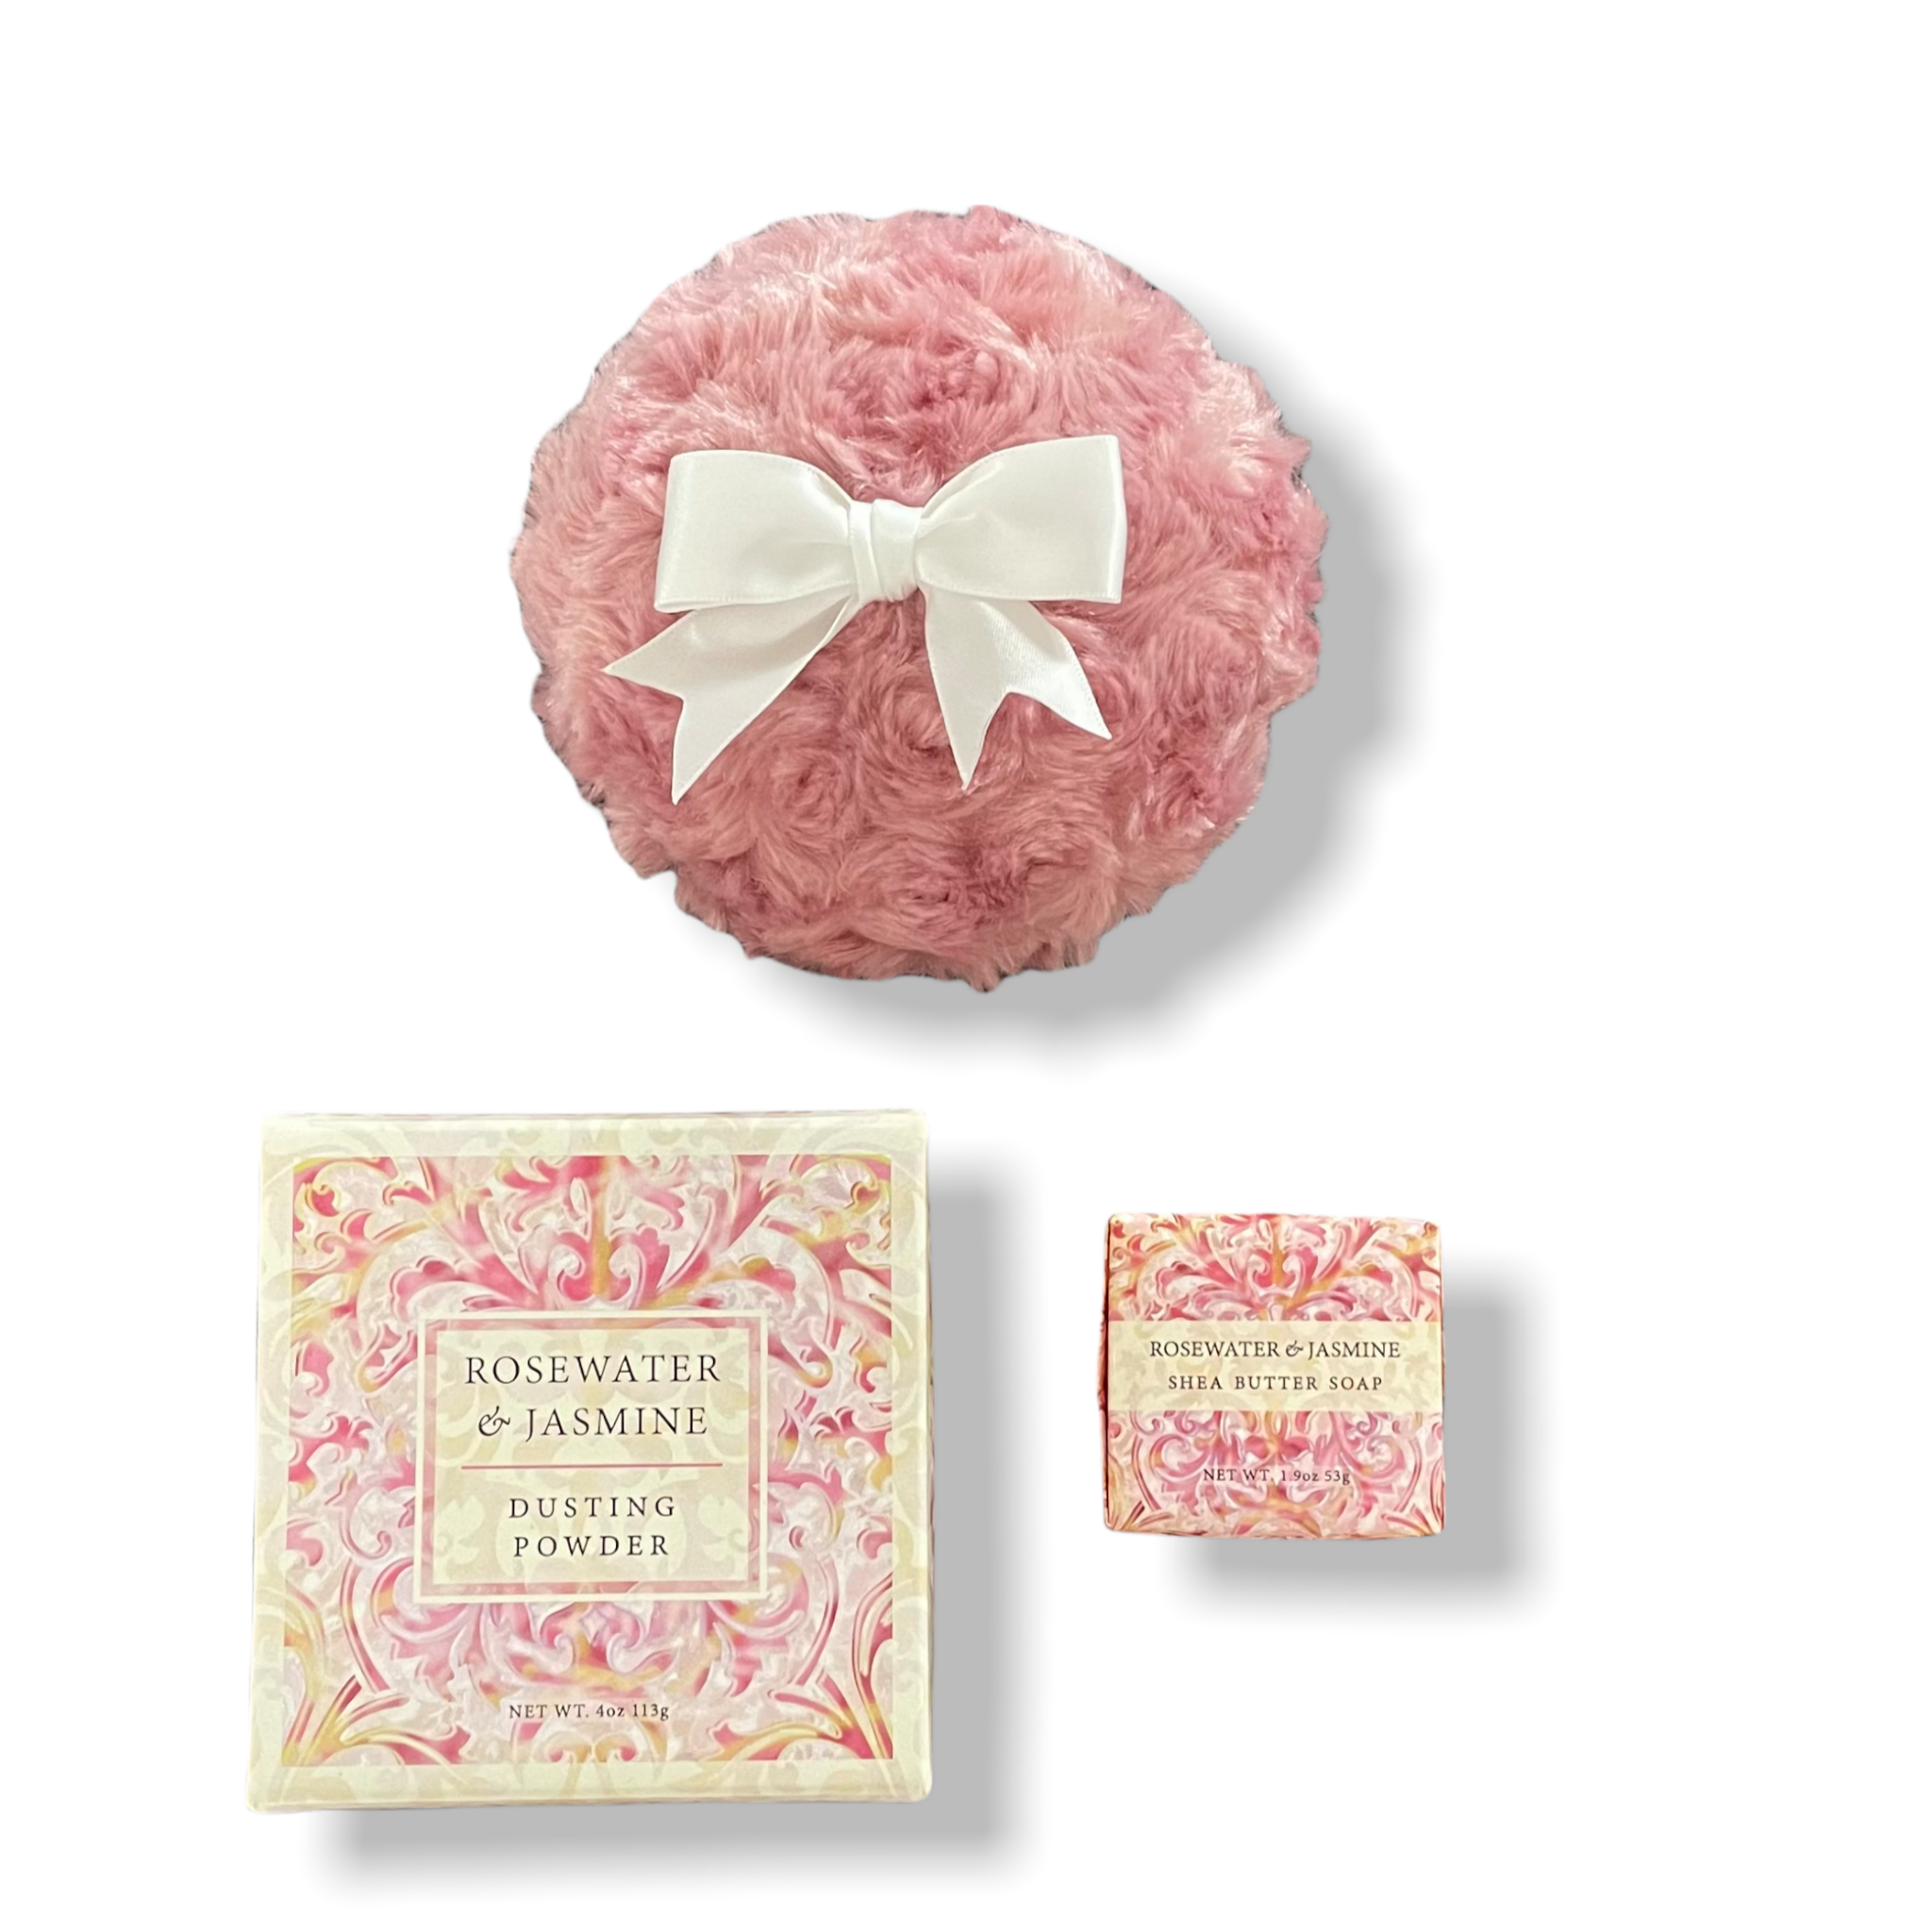 Dusting powder gift set with puff - pink - Greenwich Bay Trading Co Rosewater jasmine powder soap gift set - Merrybath.com